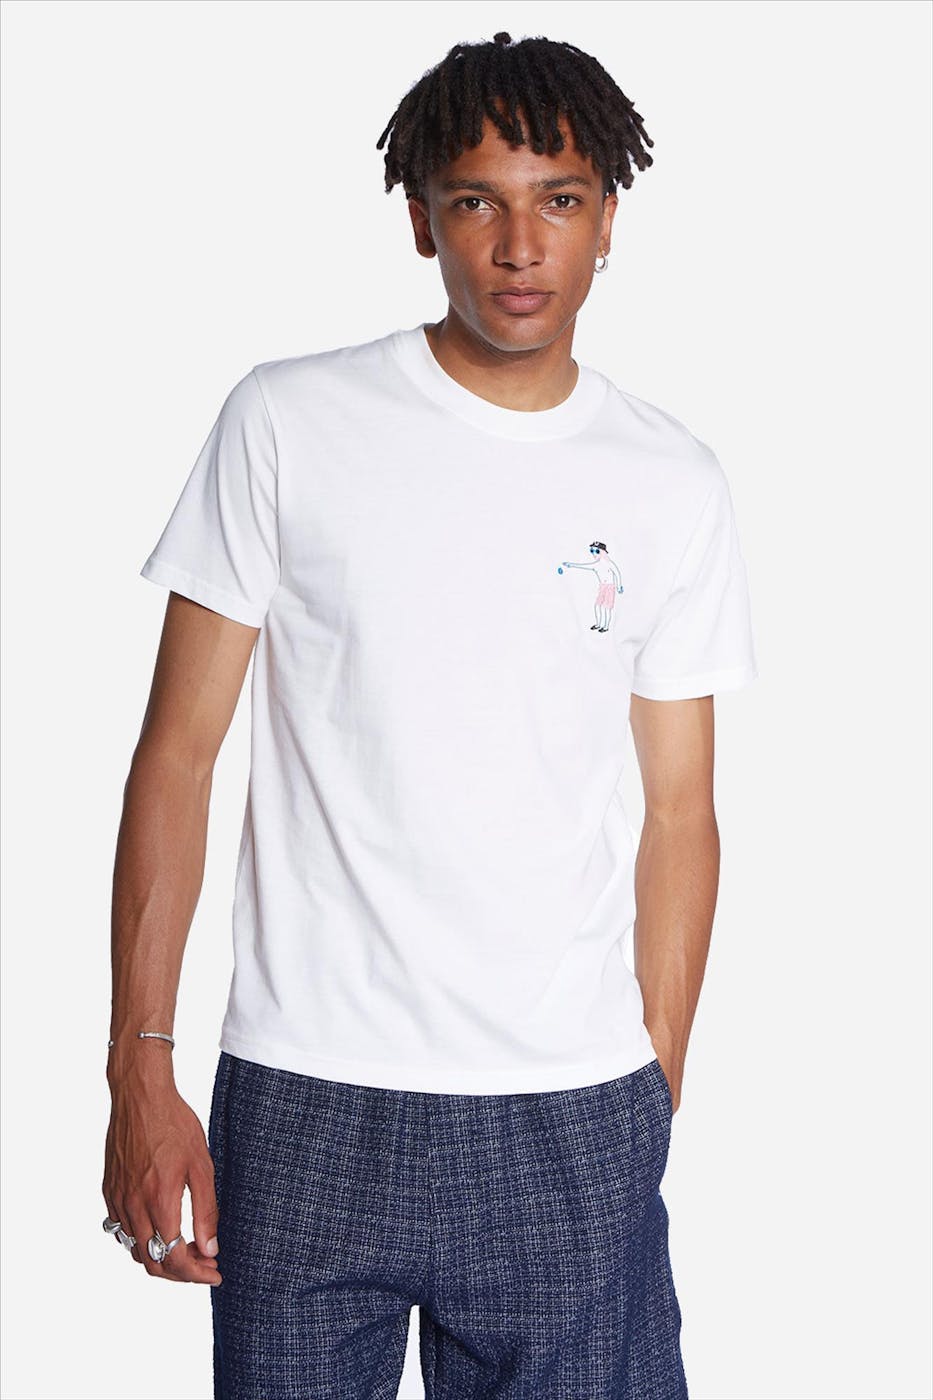 OLOW - Witte Bouliste T-shirt